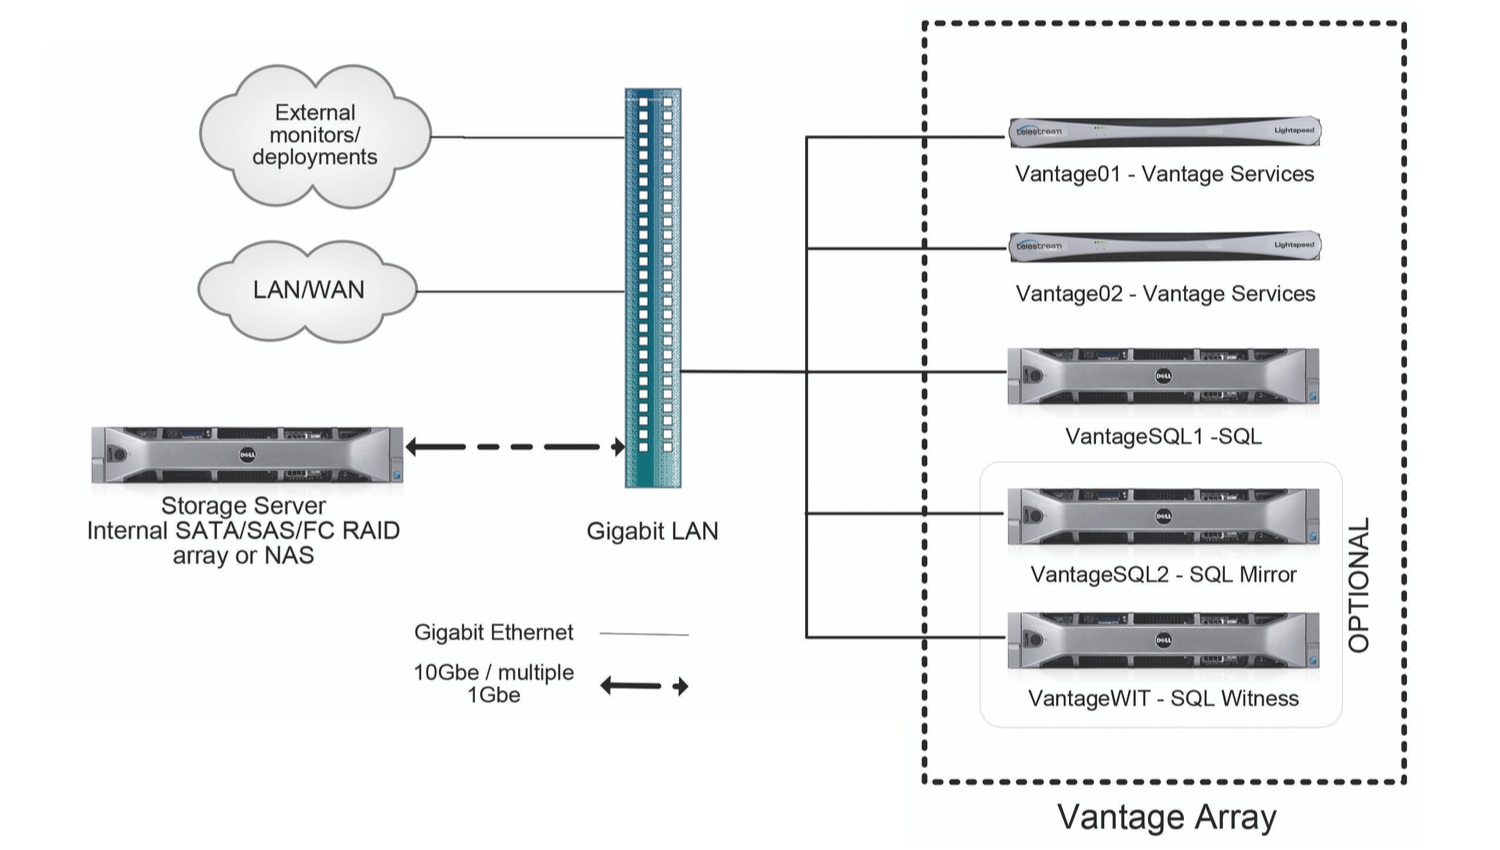  Vantage Array Configuration "Storage Server"